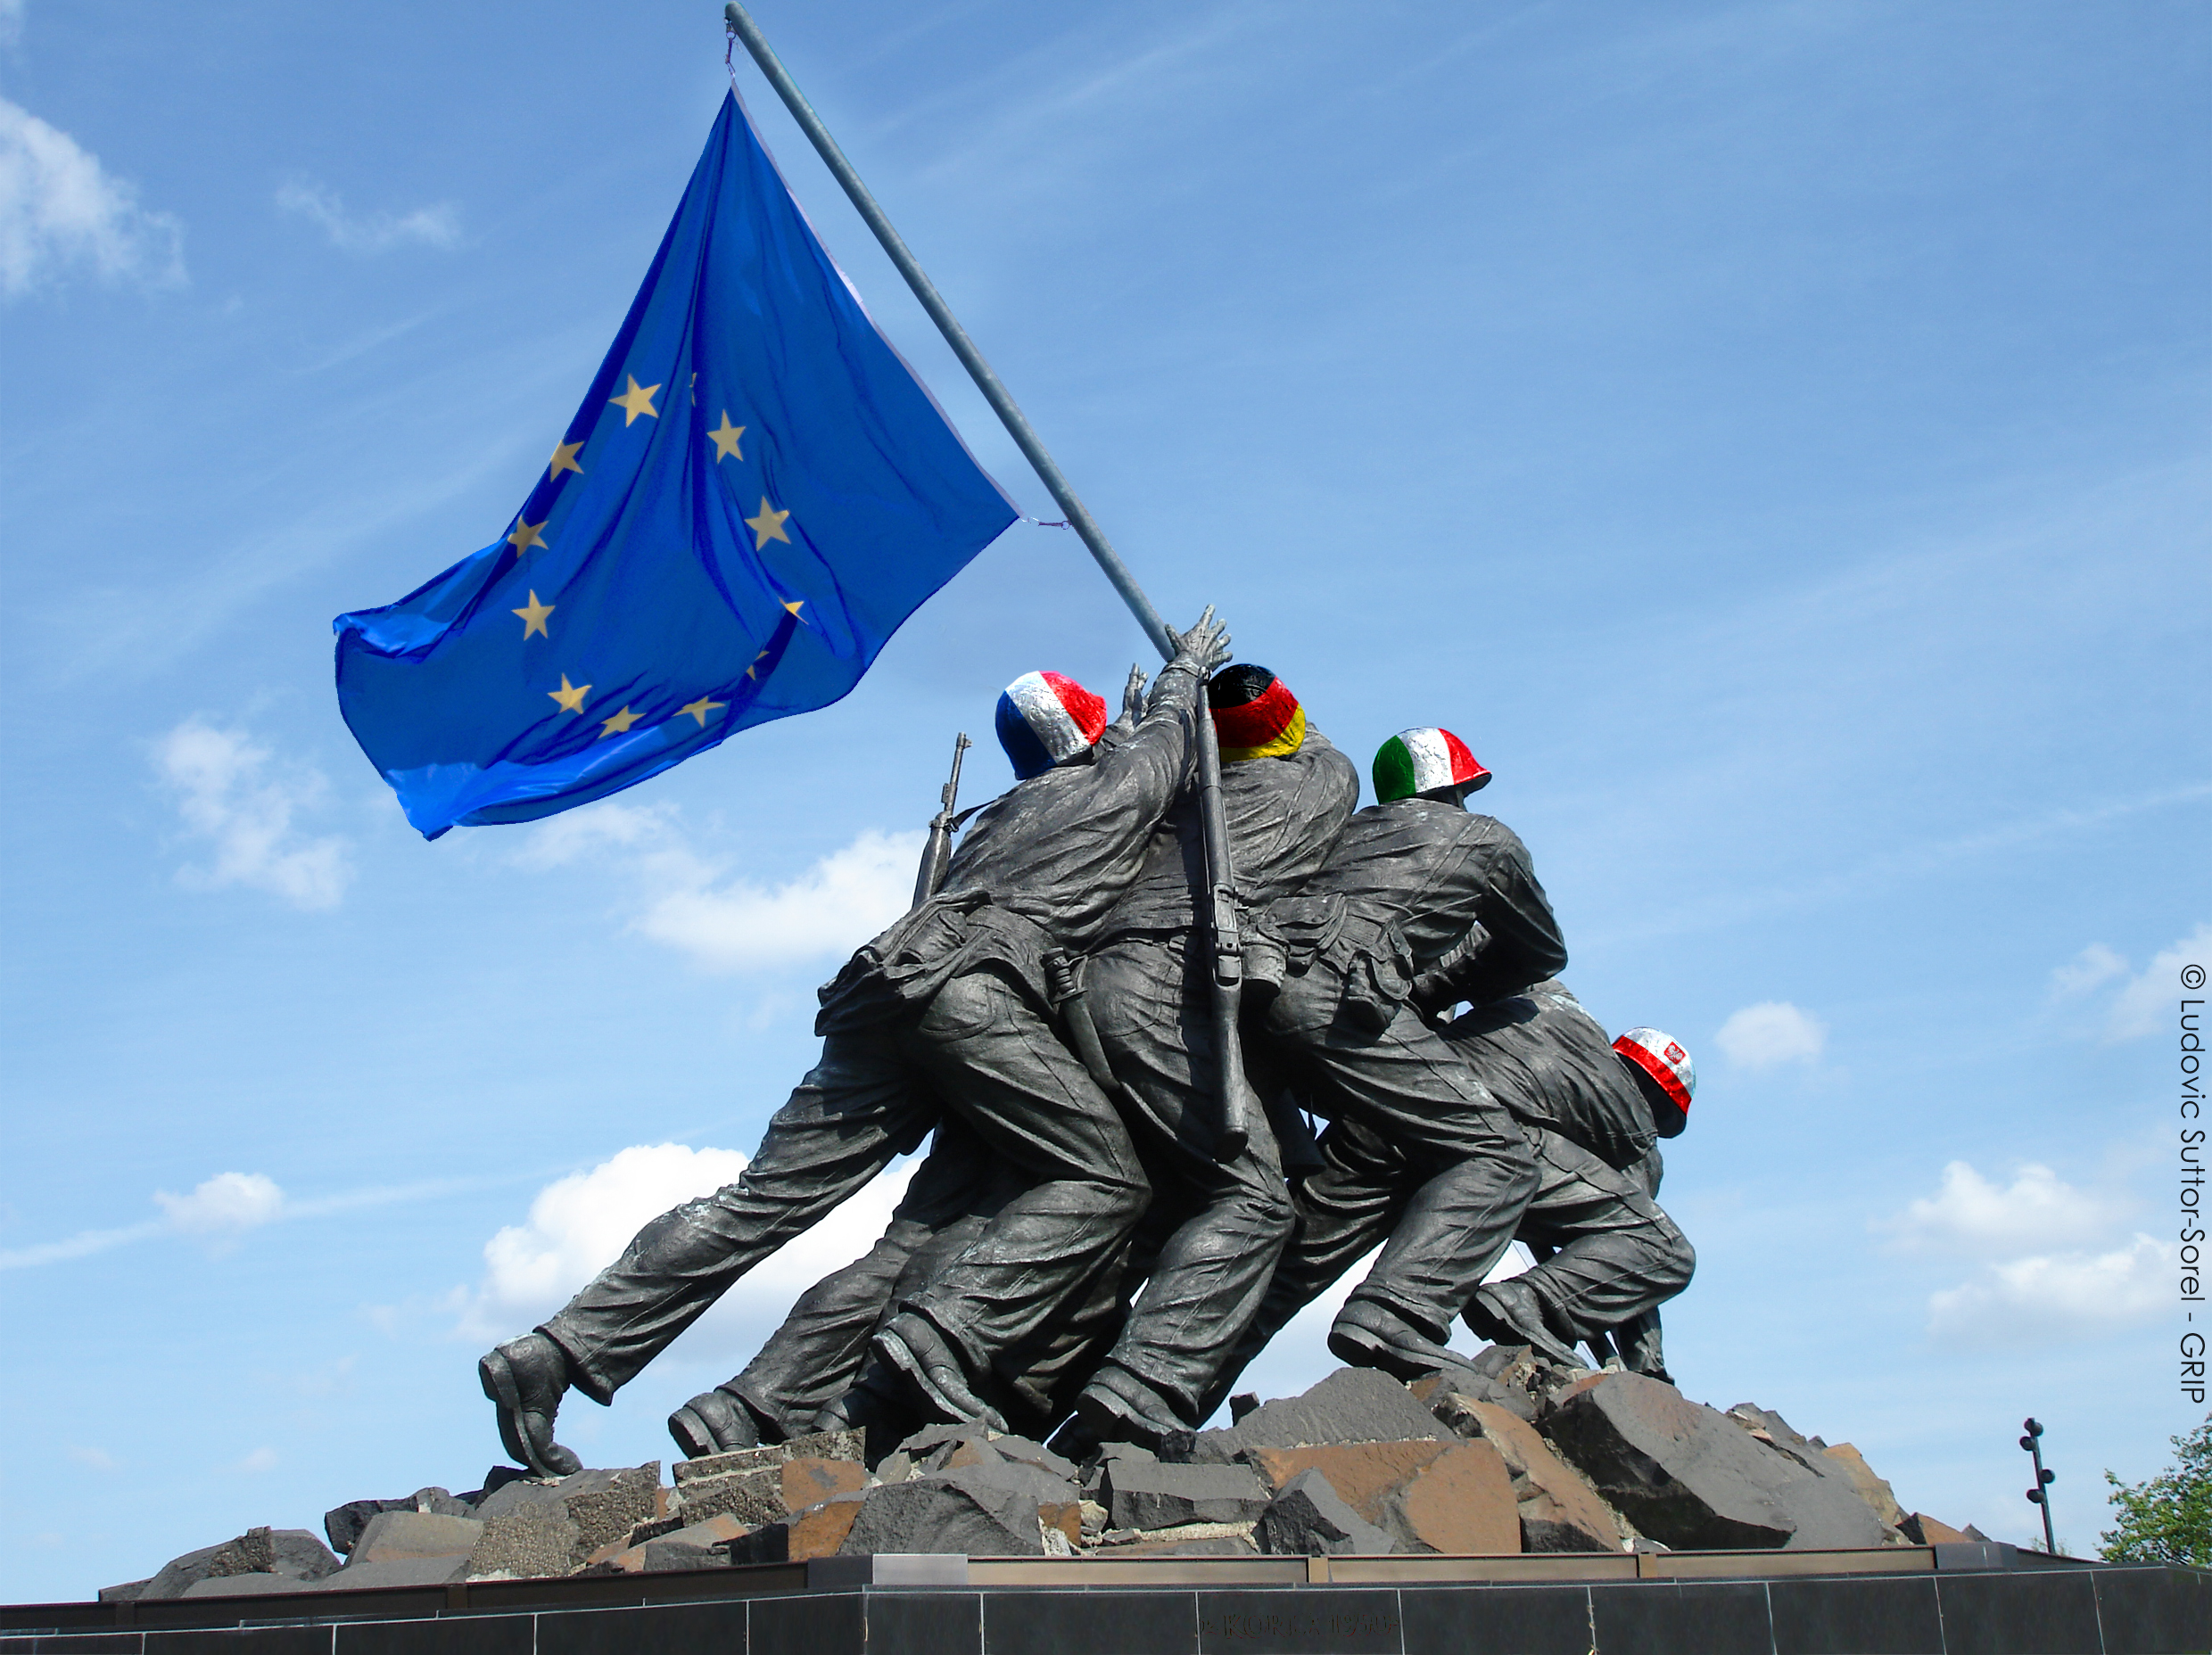 European defense: technological choices underlying political ones